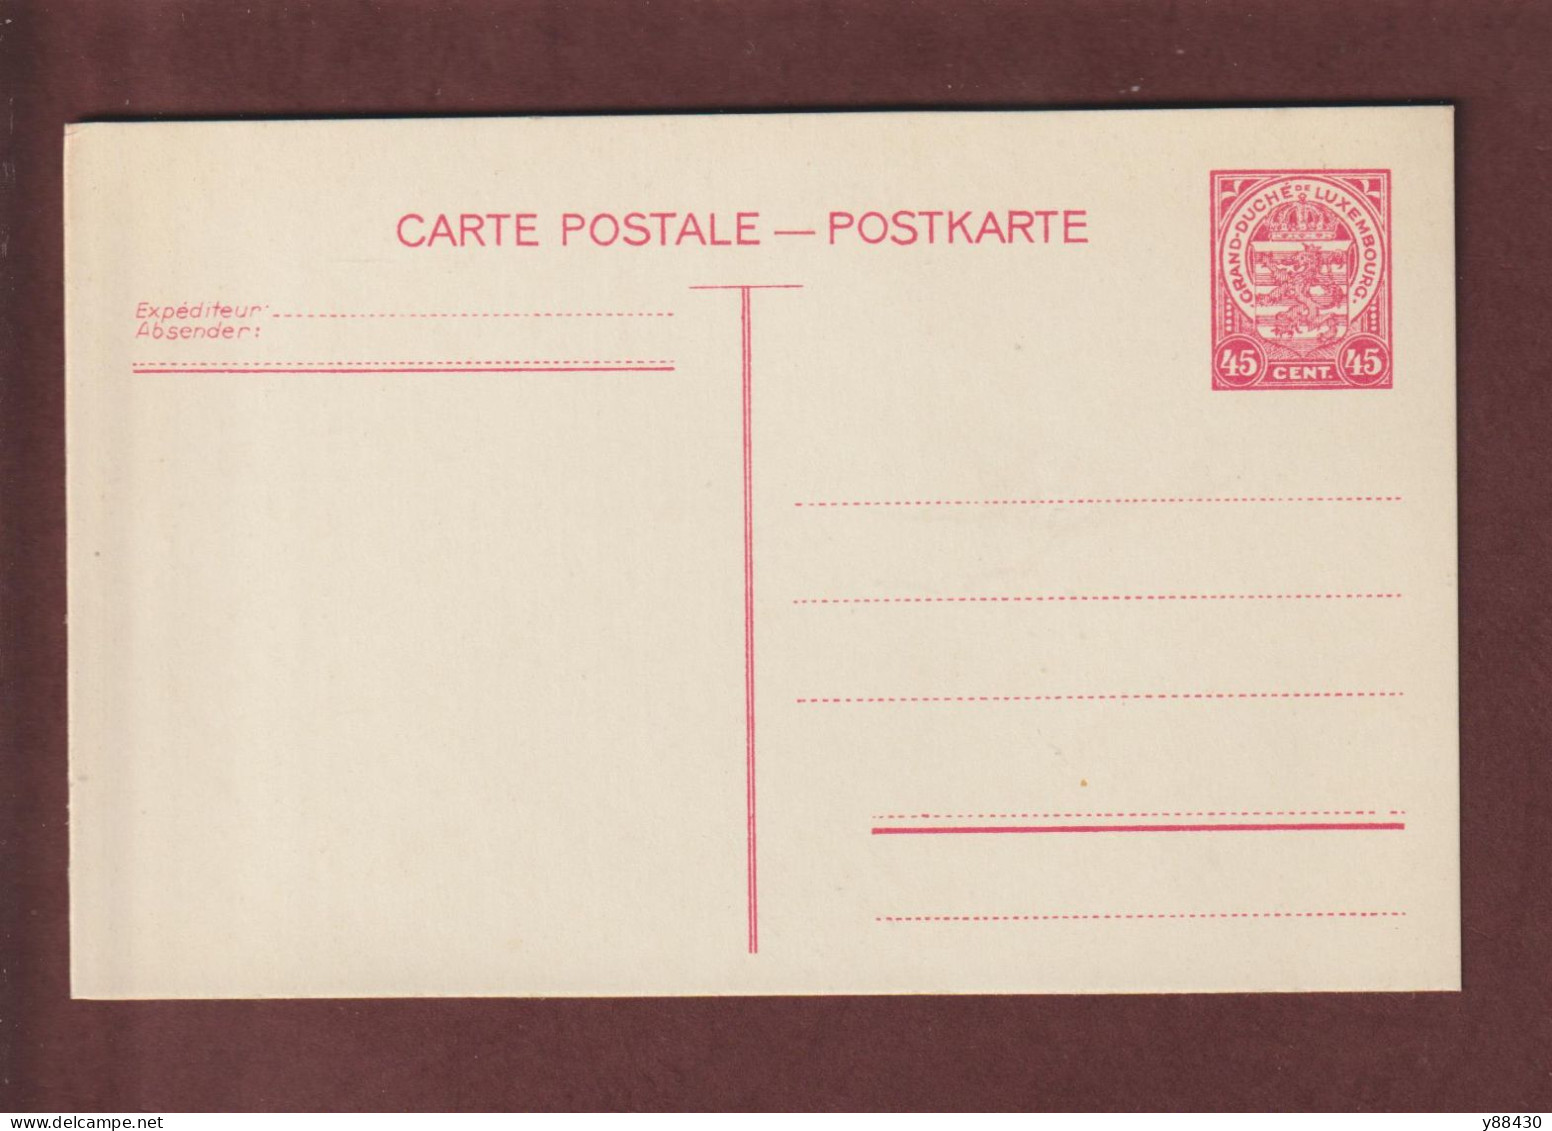 LUXEMBOURG - Entier Postal Neuf - 1910/1930 - Carte Postale  - 2 Scan - Ganzsachen